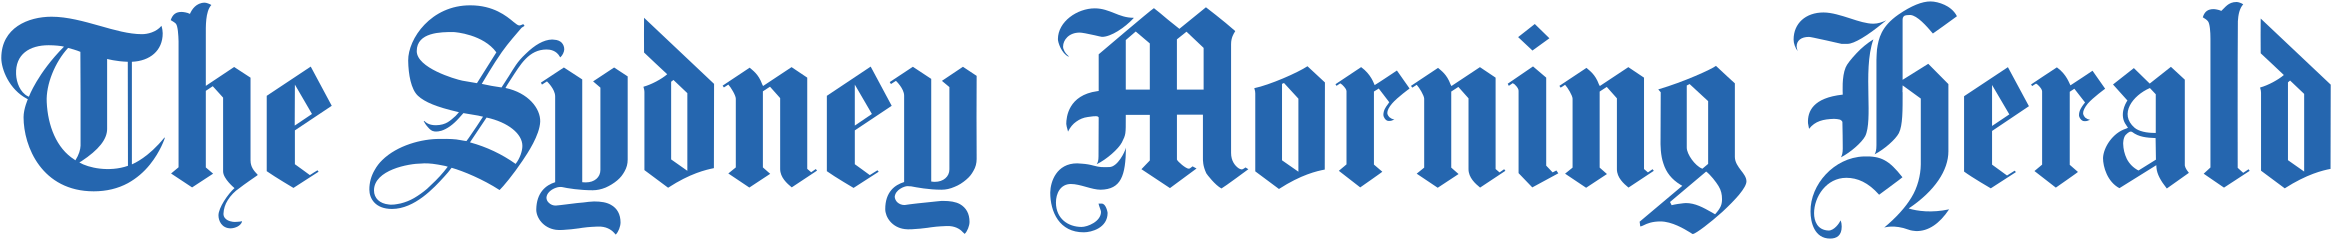 The Sydney Morning Herald Logo Png Transparent - Sydney Morning Herald Independent Always (2400x2400), Png Download